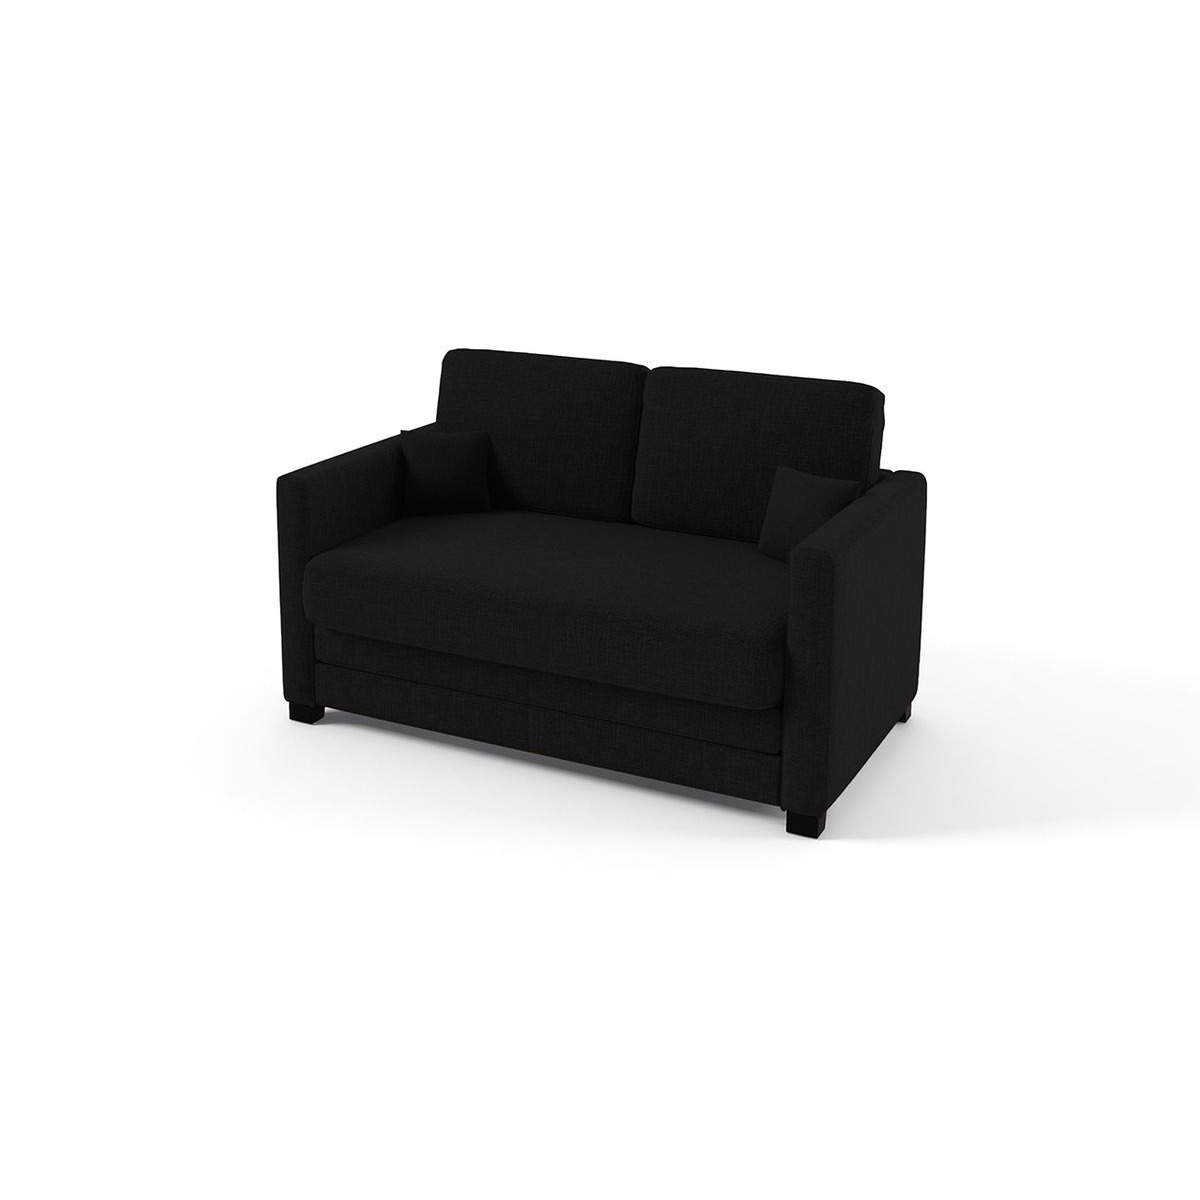 Boom 2 Seater Sofa Bed, black - image 1